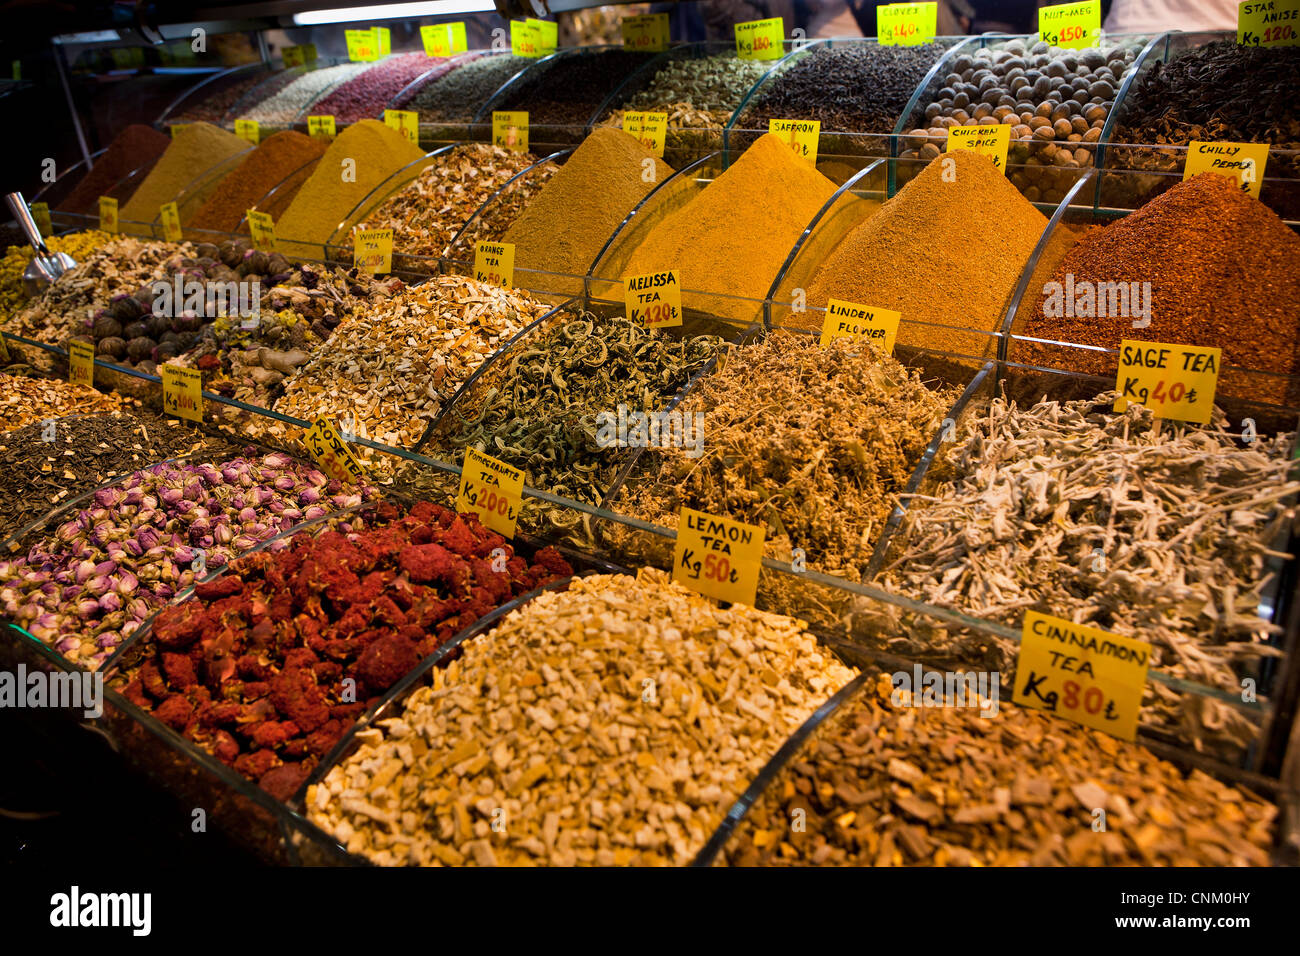 tea, herbs, and spices at the Egyptian Bazaar, Istanbul, Turkey Stock Photo